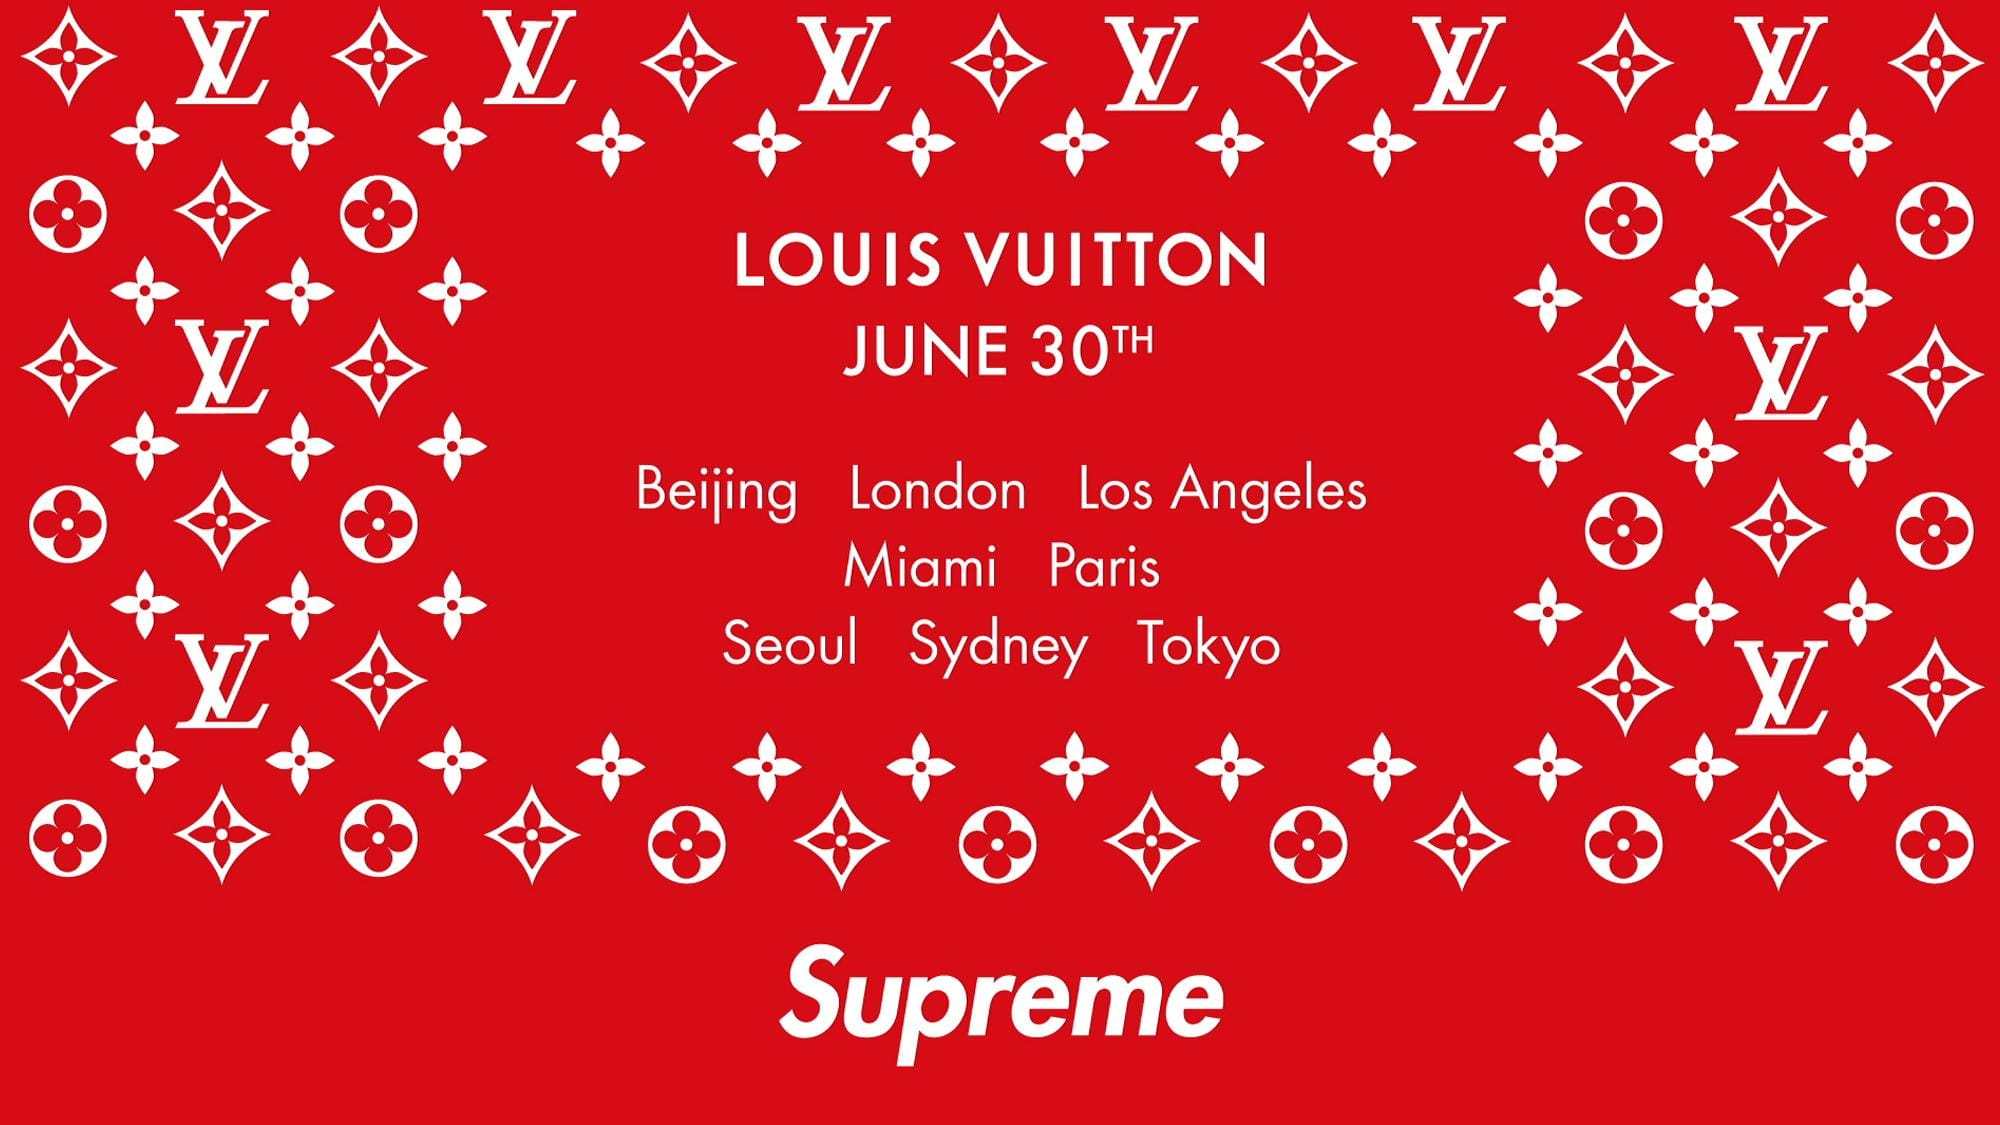 Cool Supreme Desktop Louis Vuitton Wallpapers - Wallpaper Cave 8AD